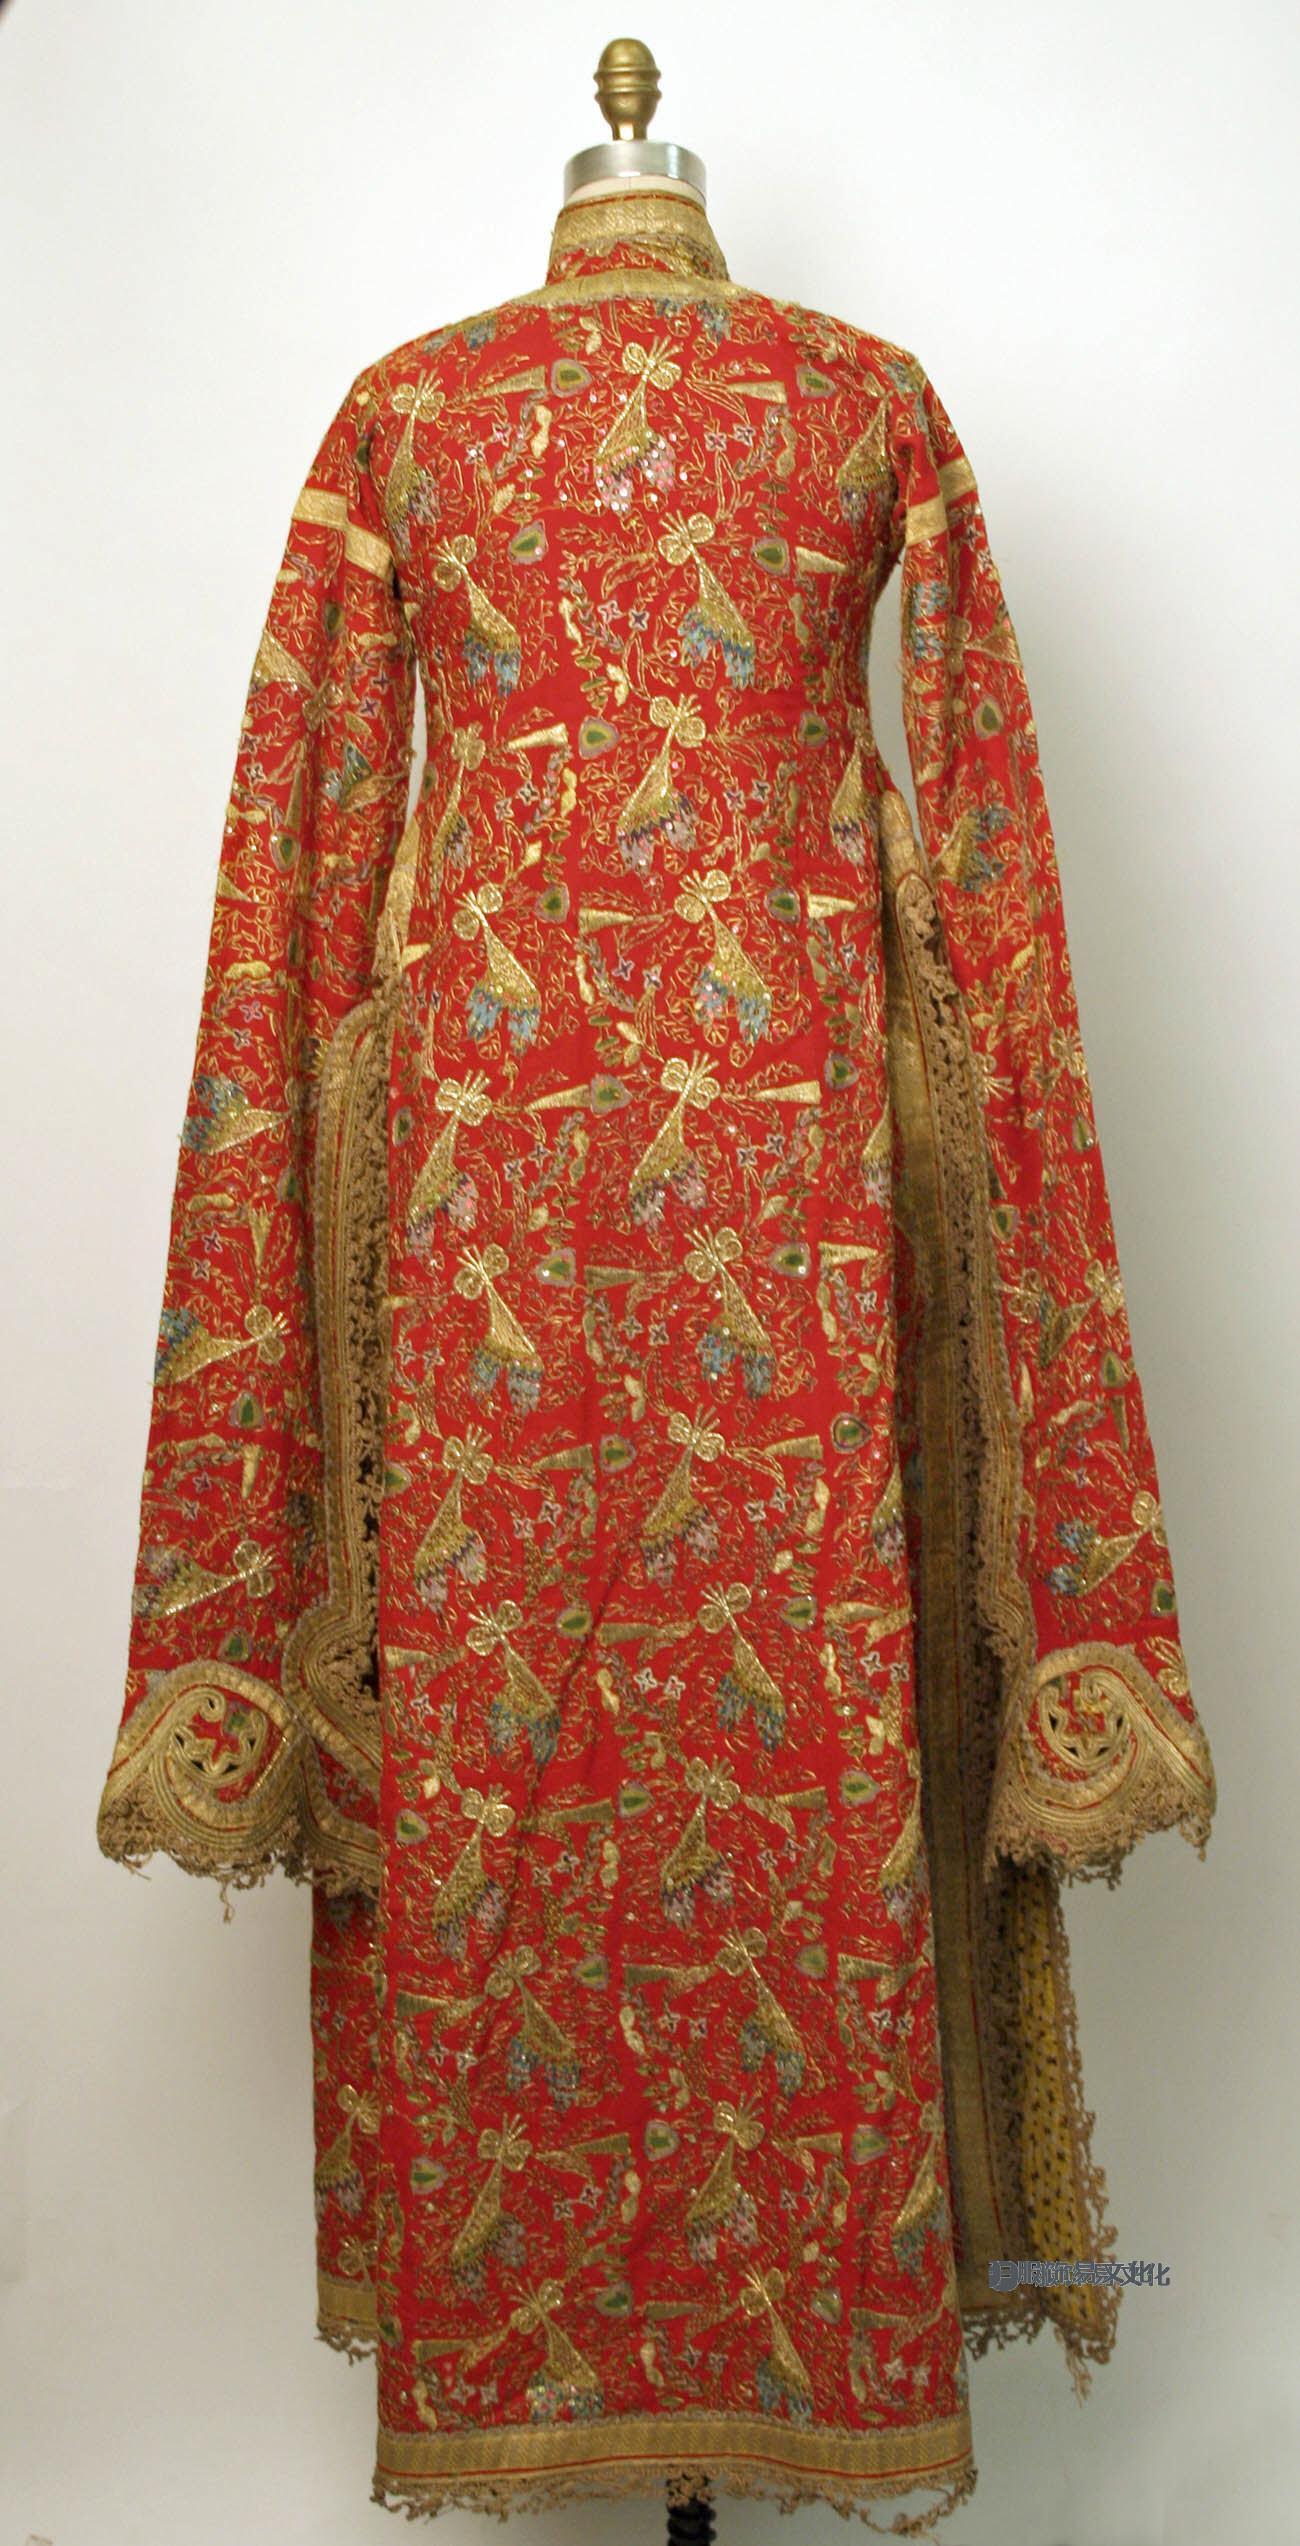 Yelek 的图像，土耳其夹克，19 世纪上半叶，由羊毛、金属和丝线、棉、金属制成，